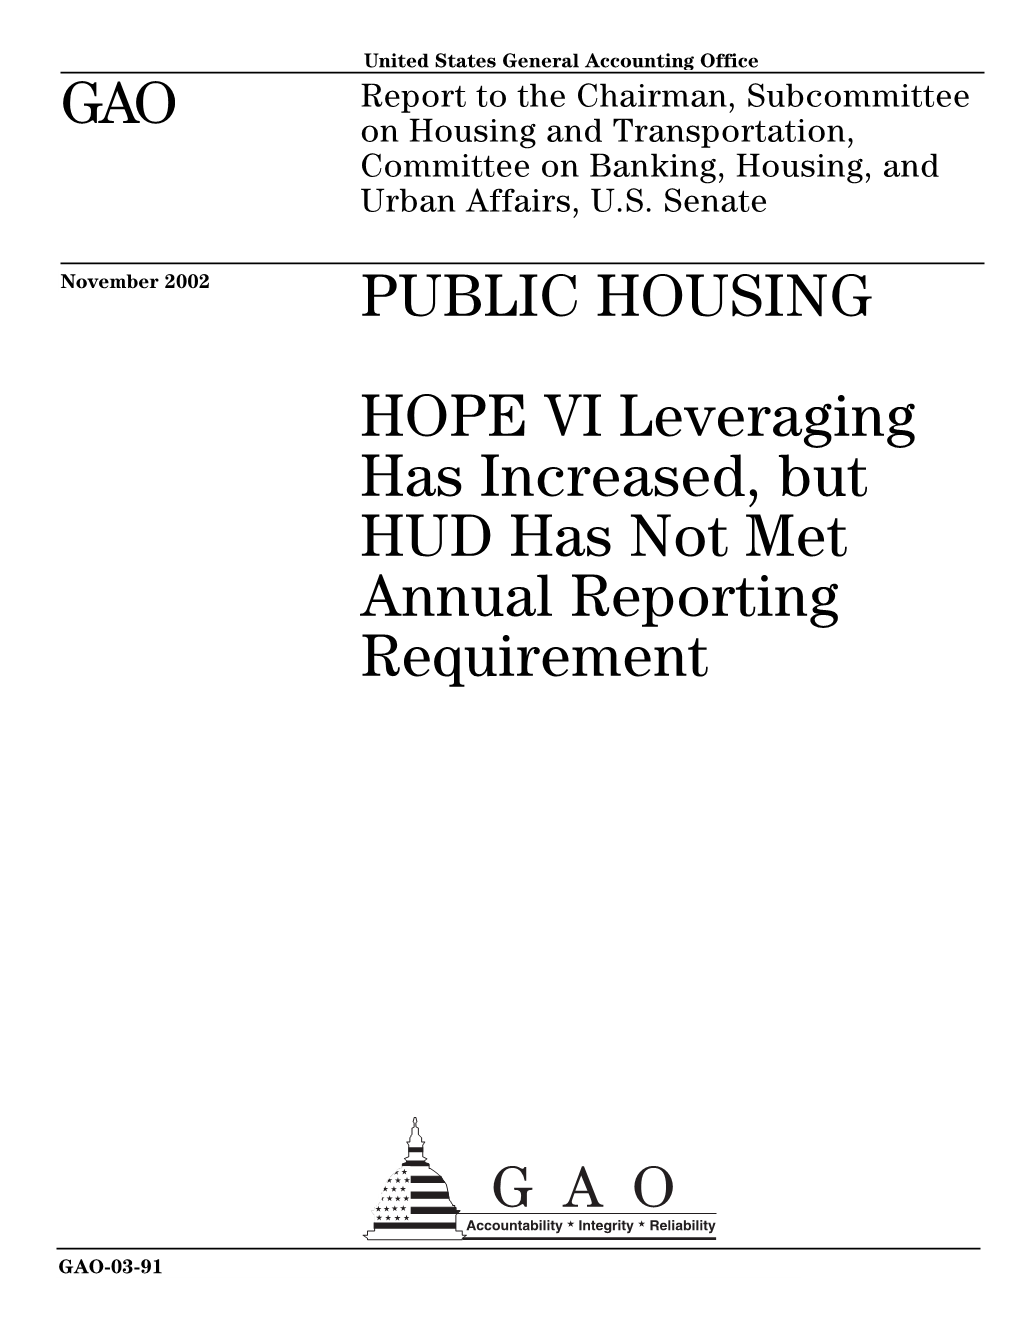 GAO-03-91 Public Housing: HOPE VI Leveraging Has Increased, But